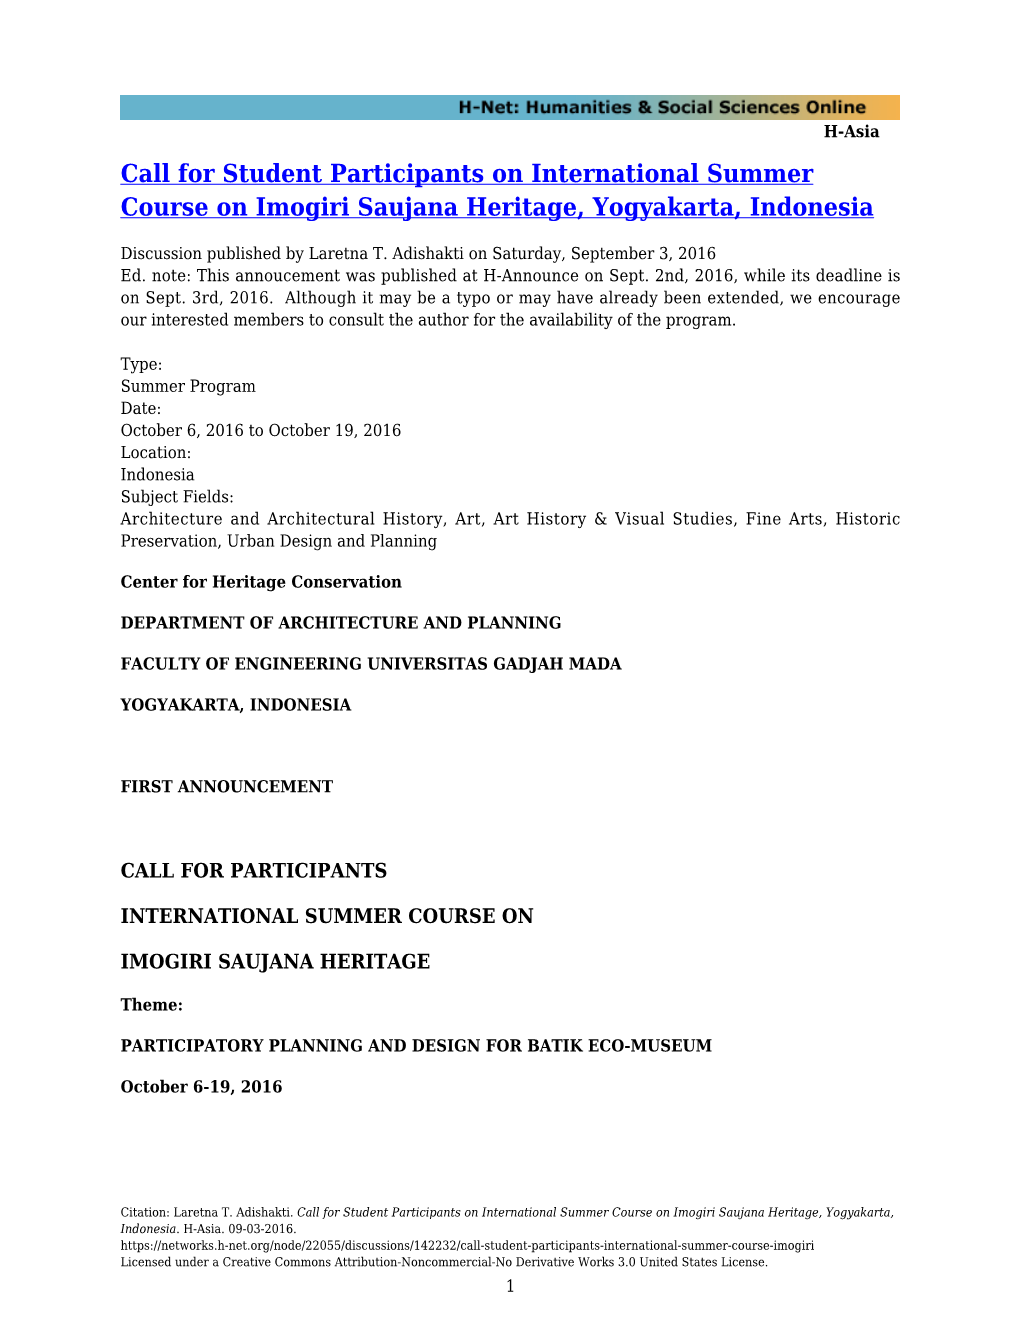 Call for Student Participants on International Summer Course on Imogiri Saujana Heritage, Yogyakarta, Indonesia